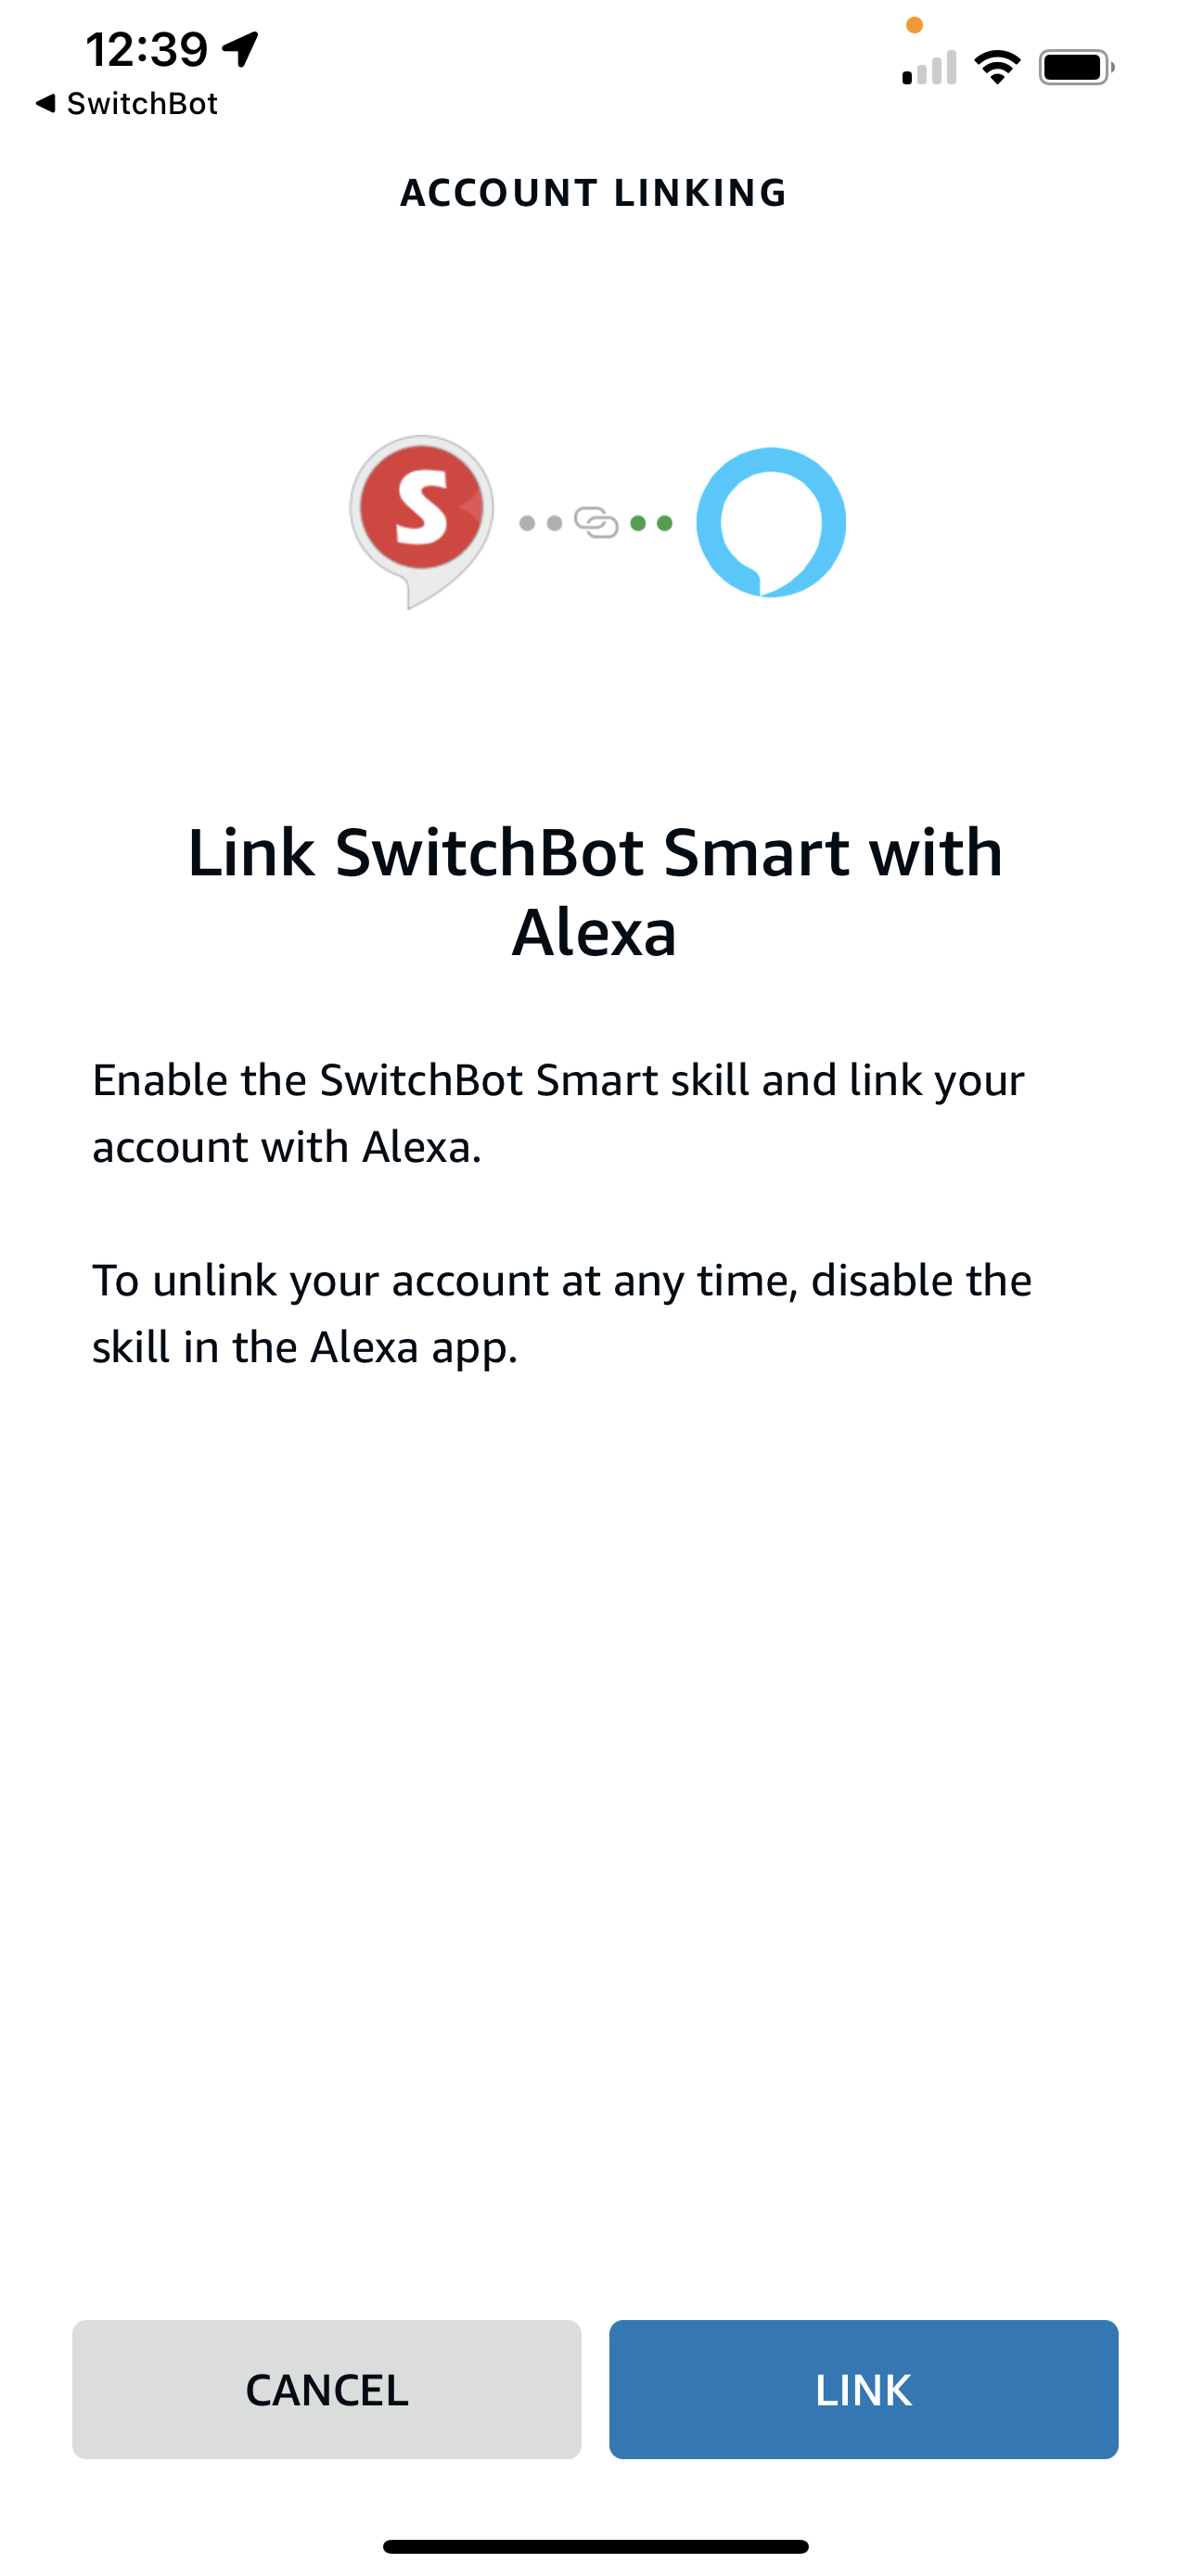 SwitchBot app image